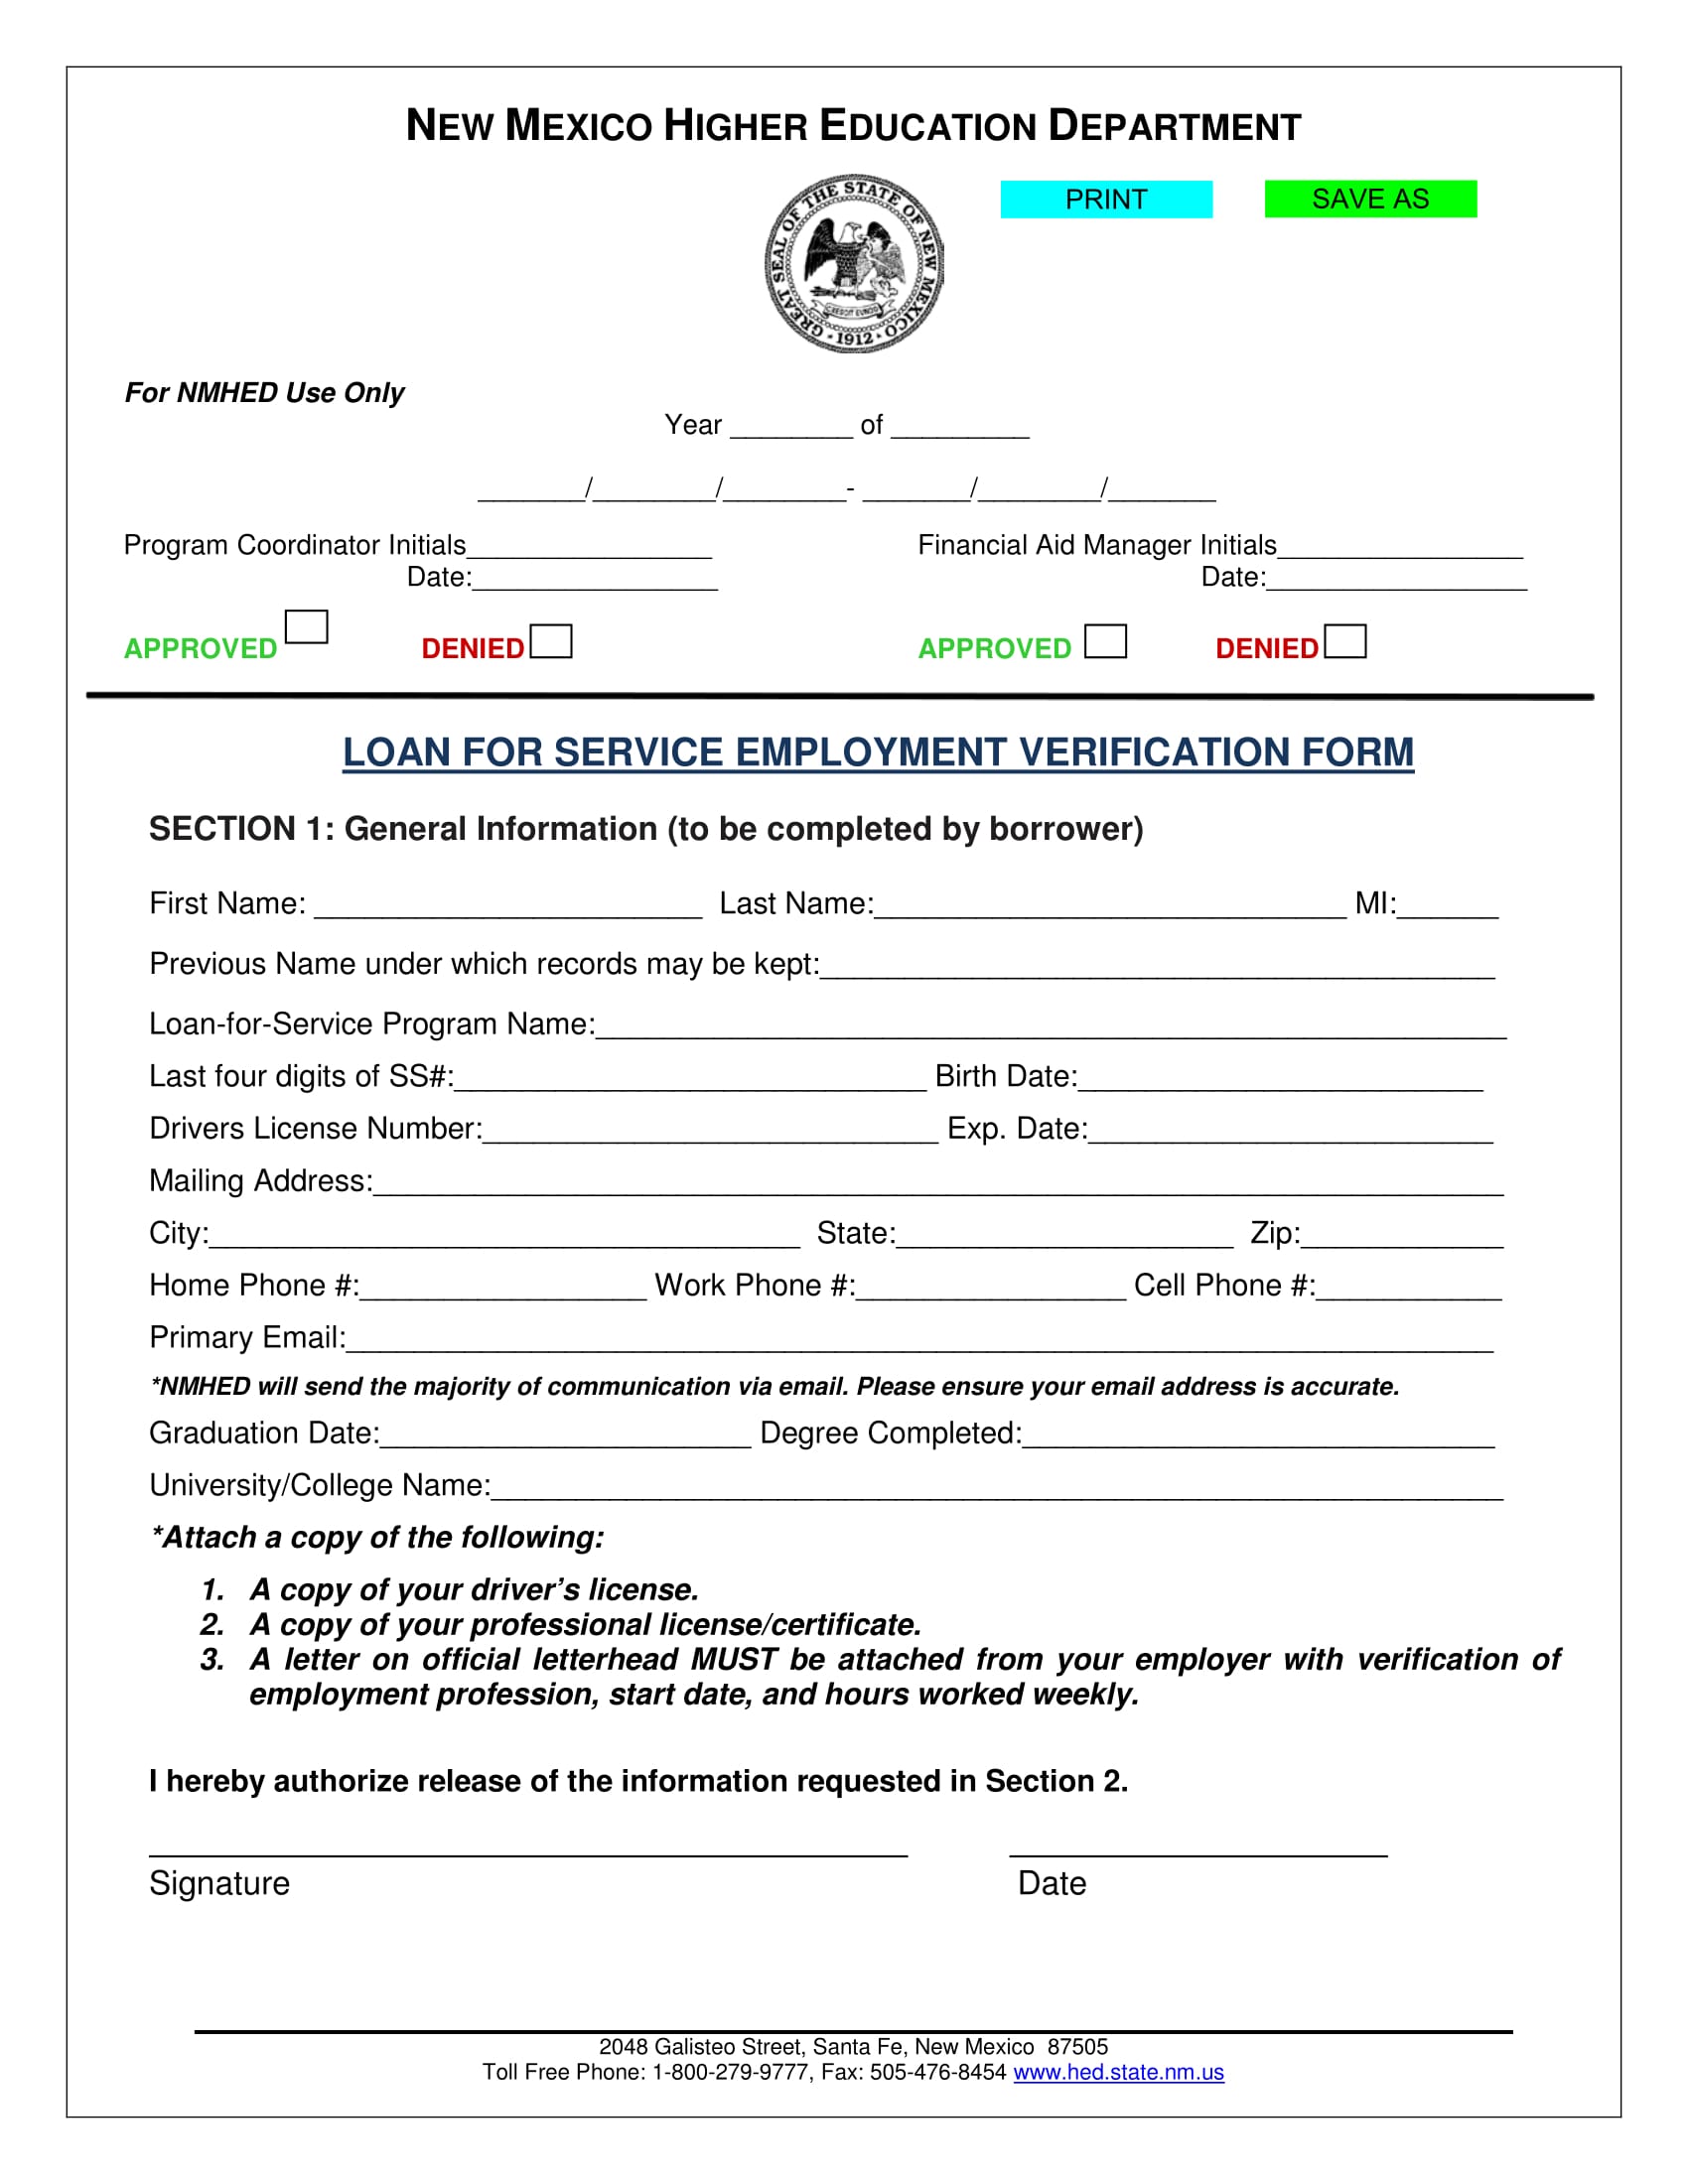 loan for service employment verification form 1